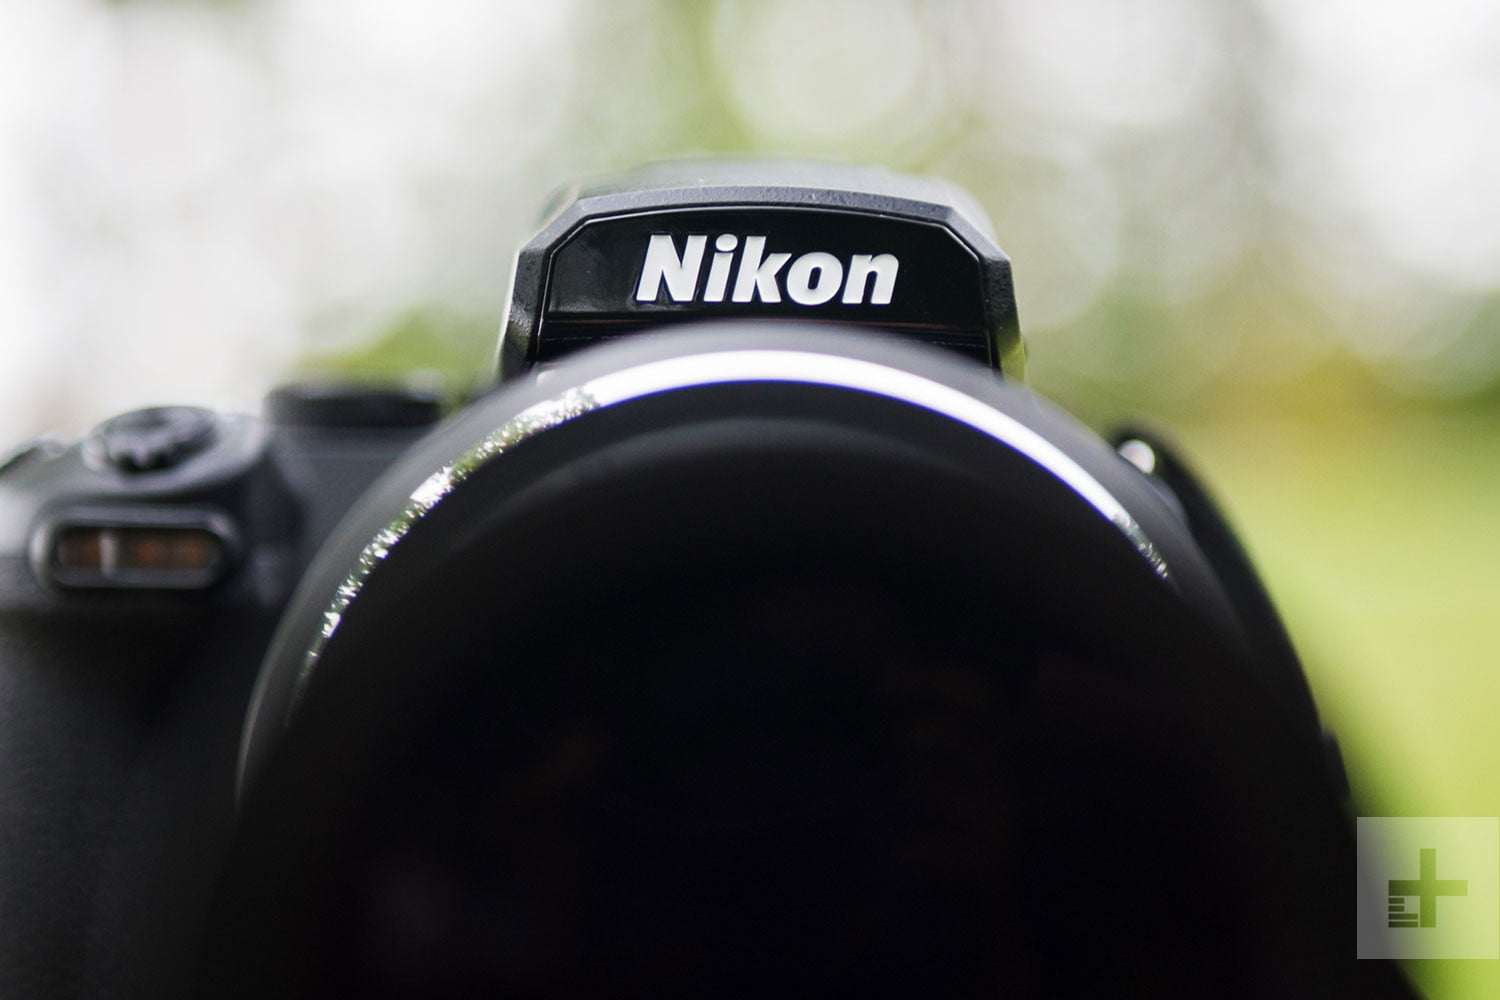 Nikon Camera Download Pictures Mac